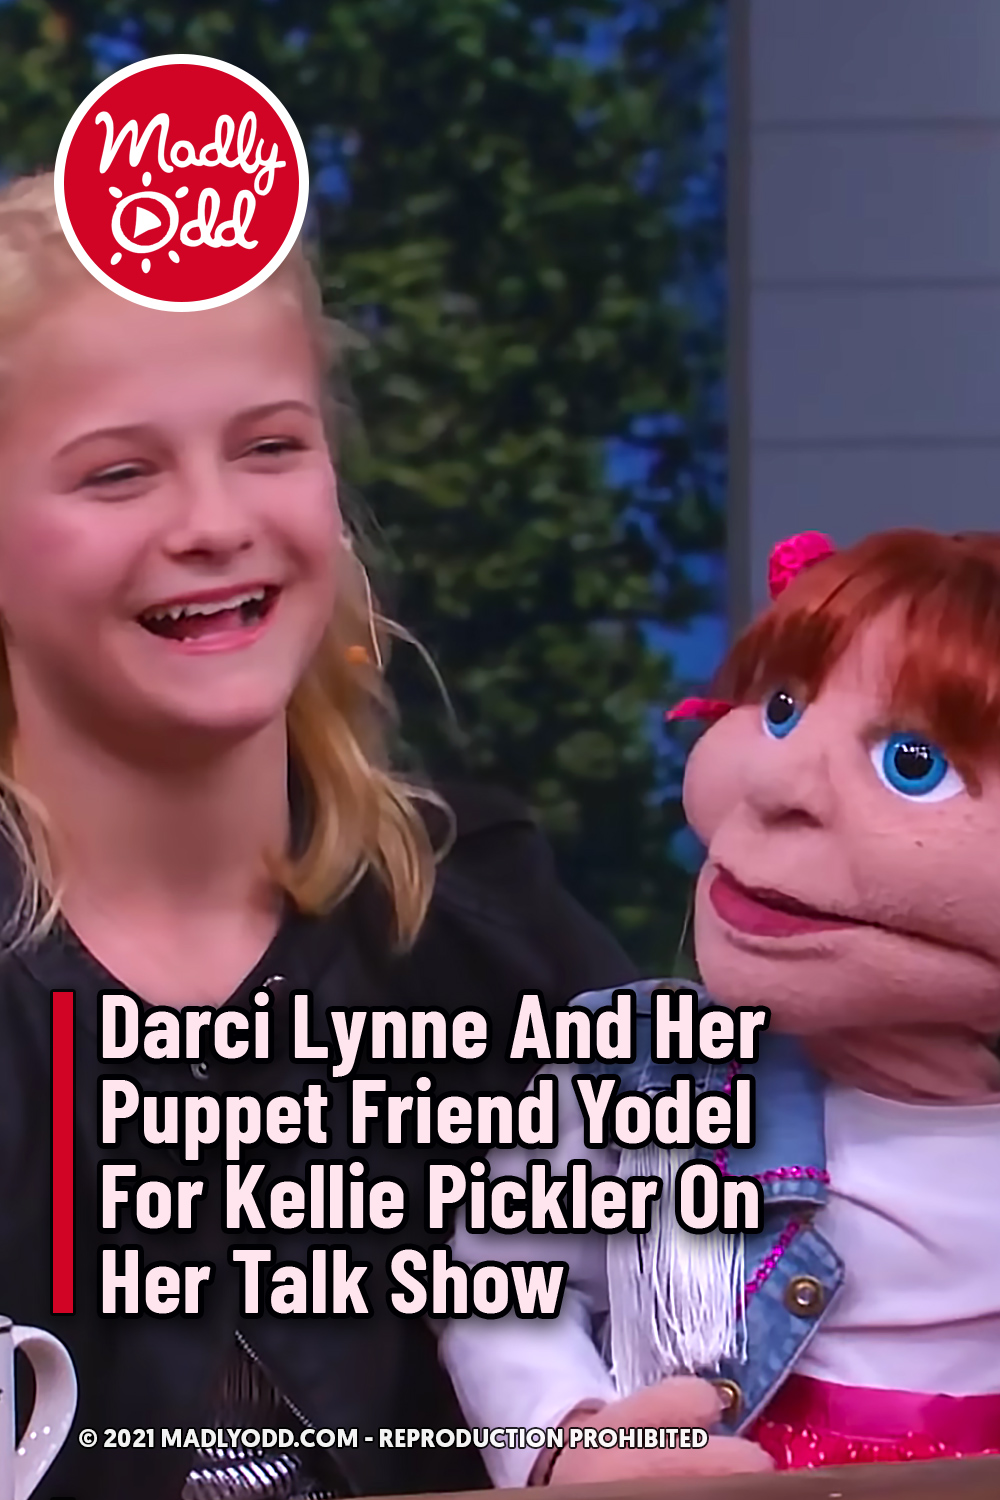 Darci Lynne And Her Puppet Friend Yodel For Kellie Pickler On Her Talk Show